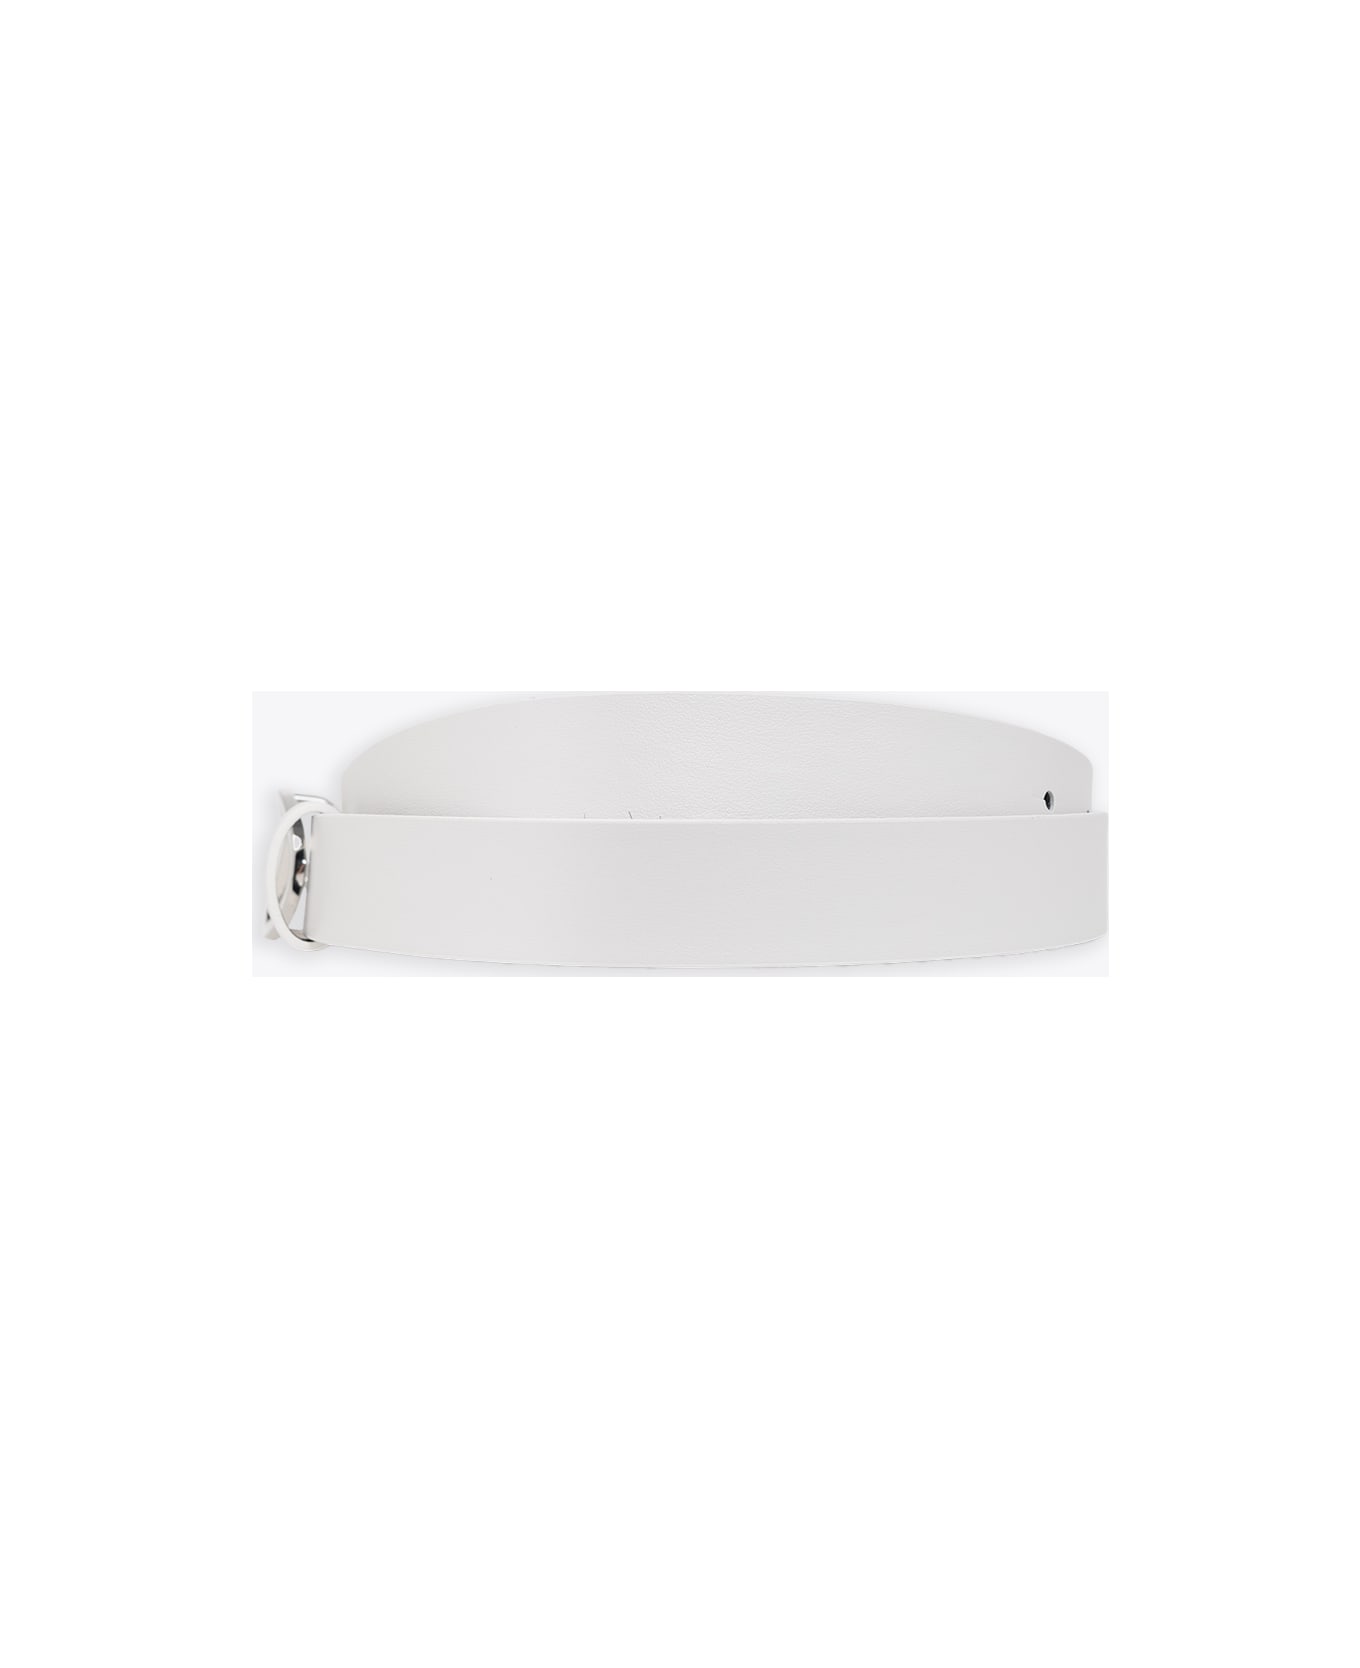 Diesel Oval D Logo B-1dr 25 Belt White Leather Belt With Oval-d Buckle - B-1dr 25 Belt - White